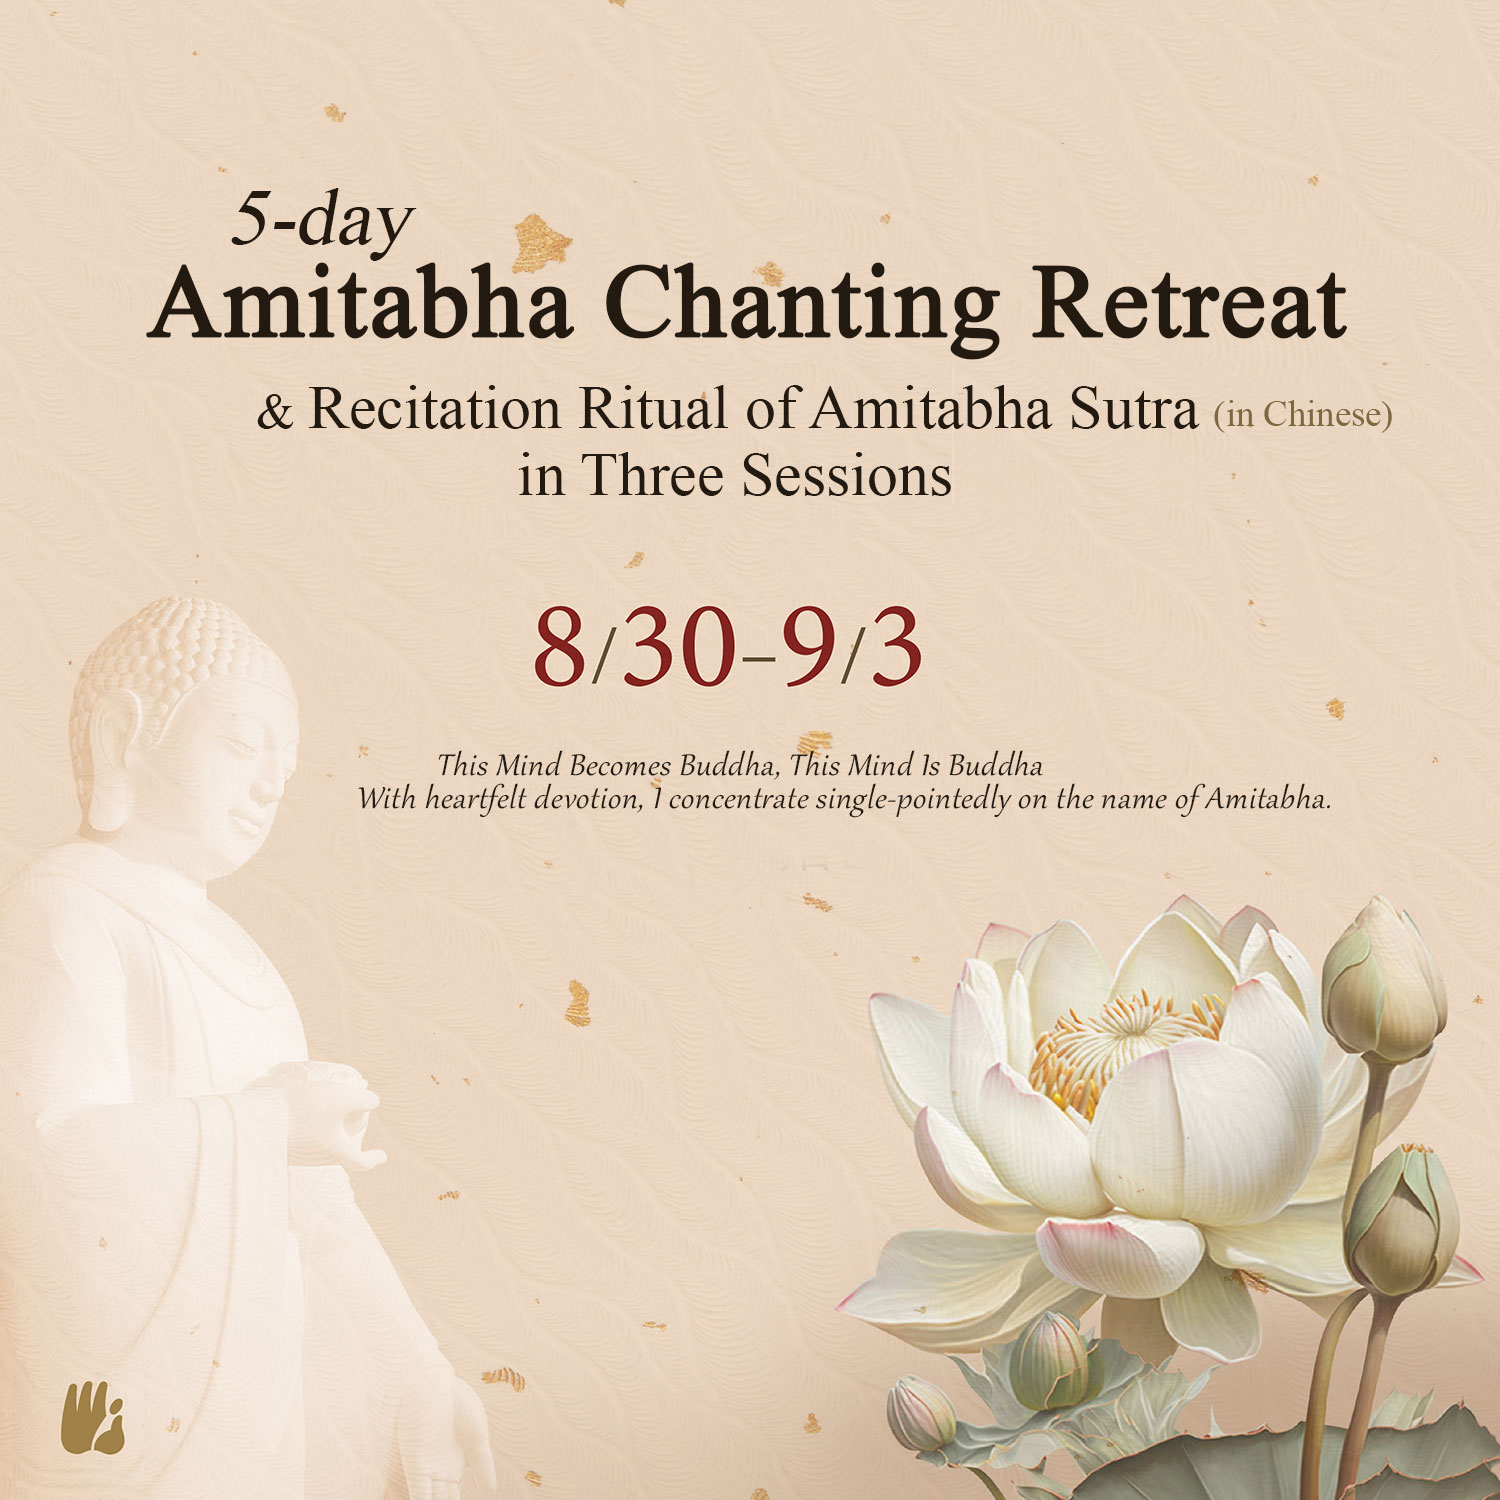 5-day Amitabha Chanting Retreat + Recitation Ritual of Amitabha Sutra in Three Sessions